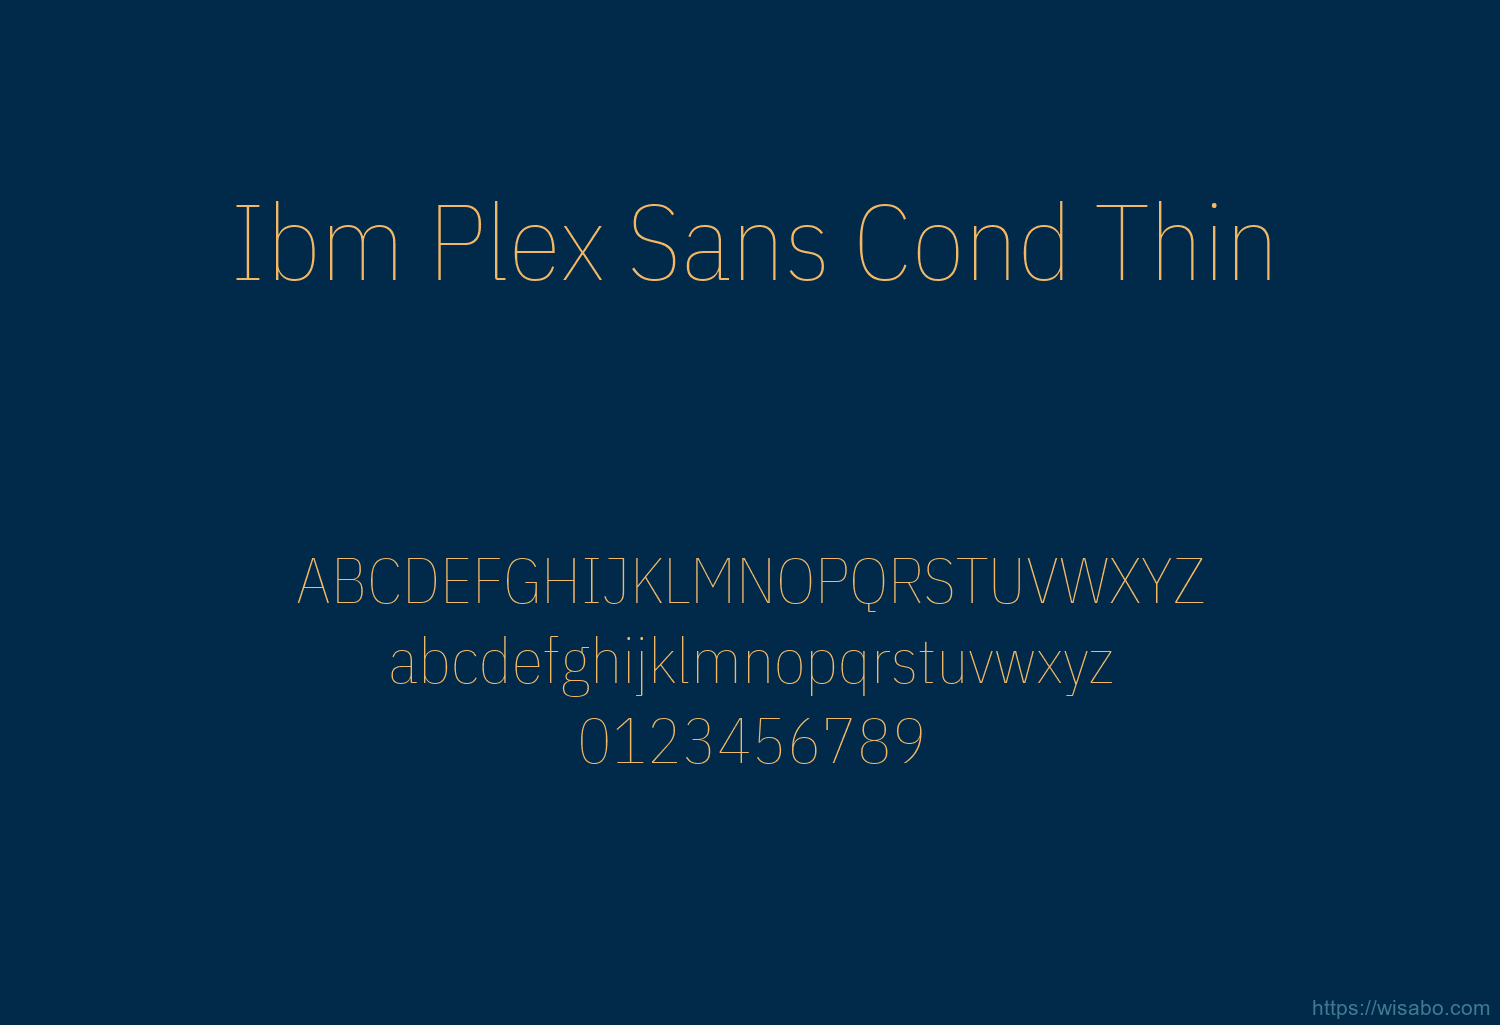 Ibm Plex Sans Cond Thin